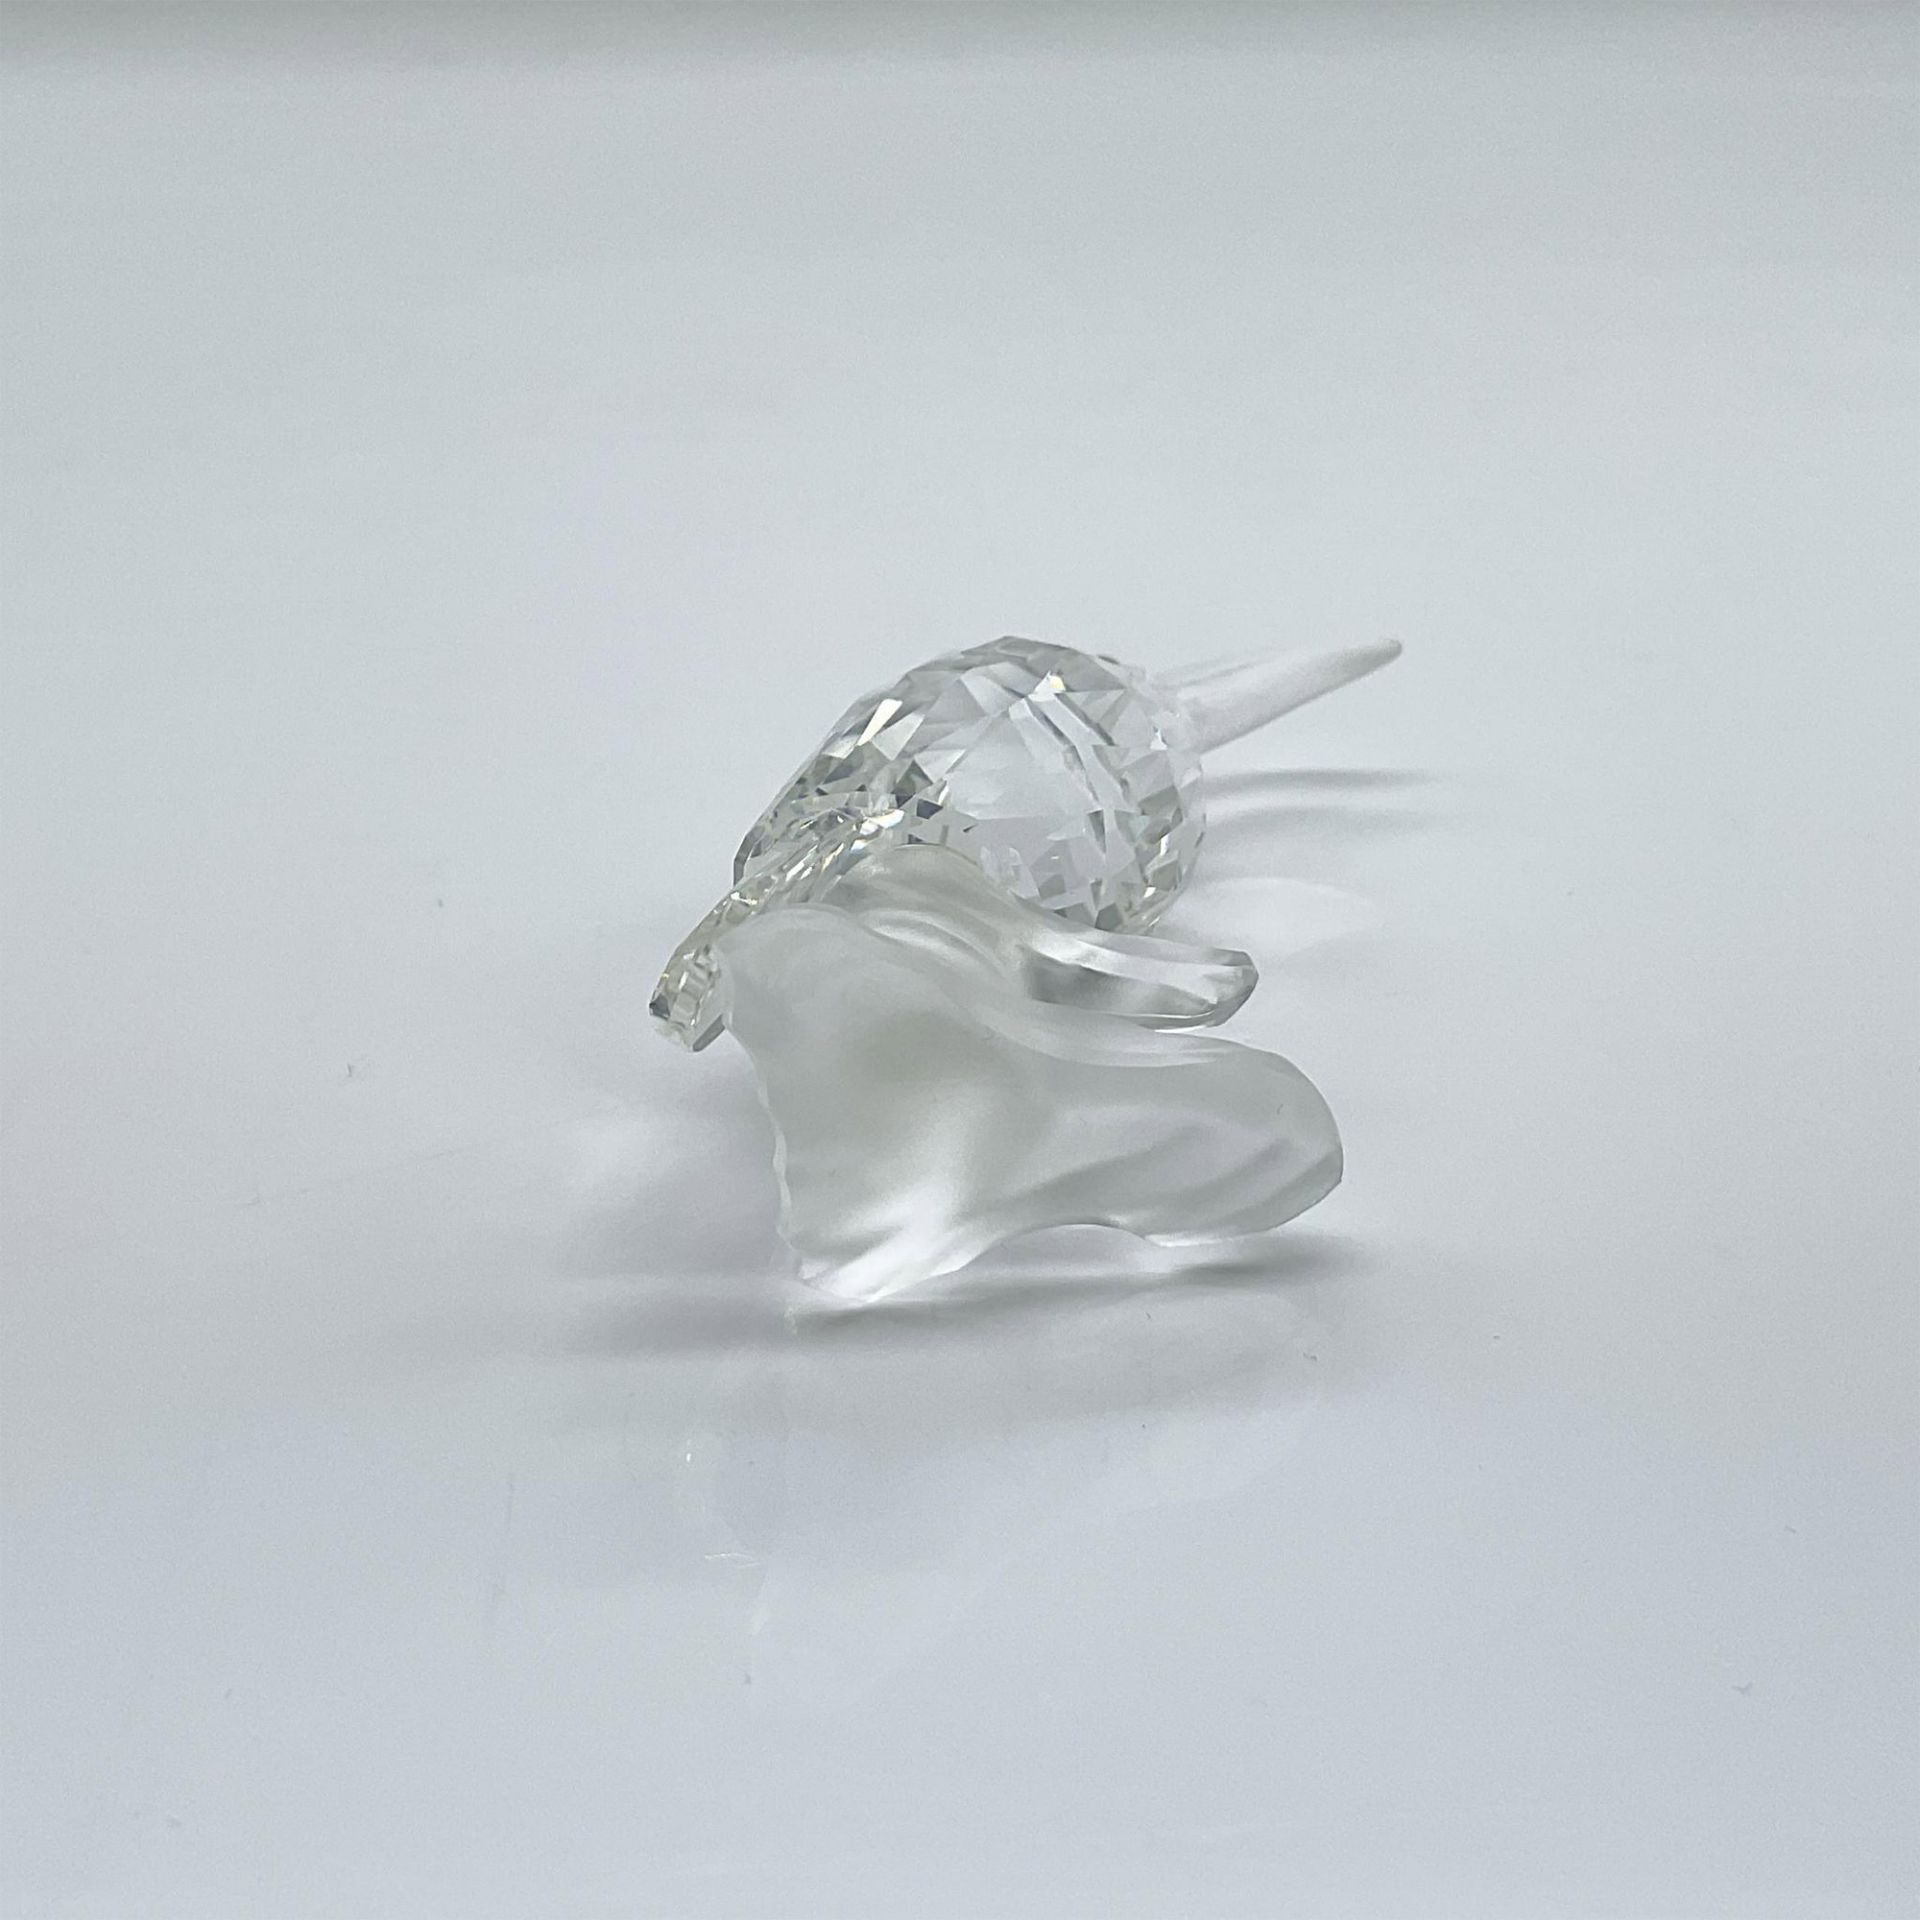 Swarovski Silver Crystal Figurine, Toucan - Image 3 of 3